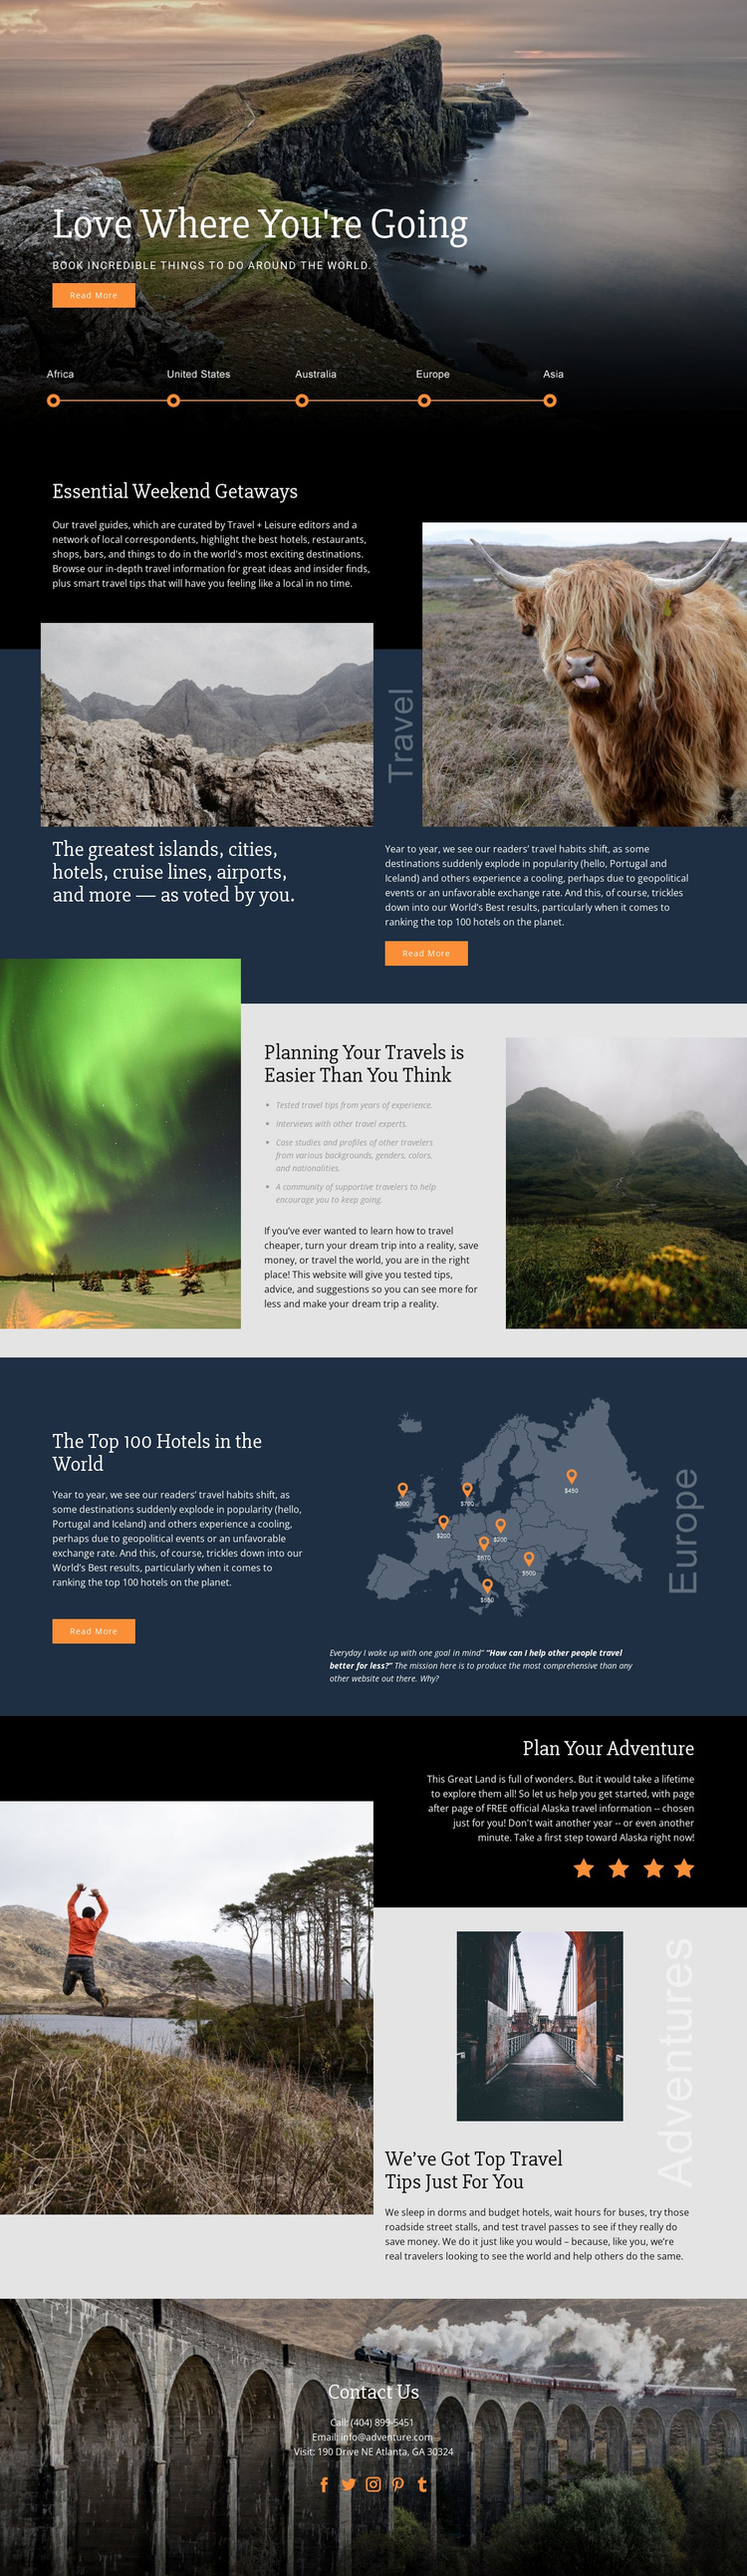 Planning Your Travel Website Design